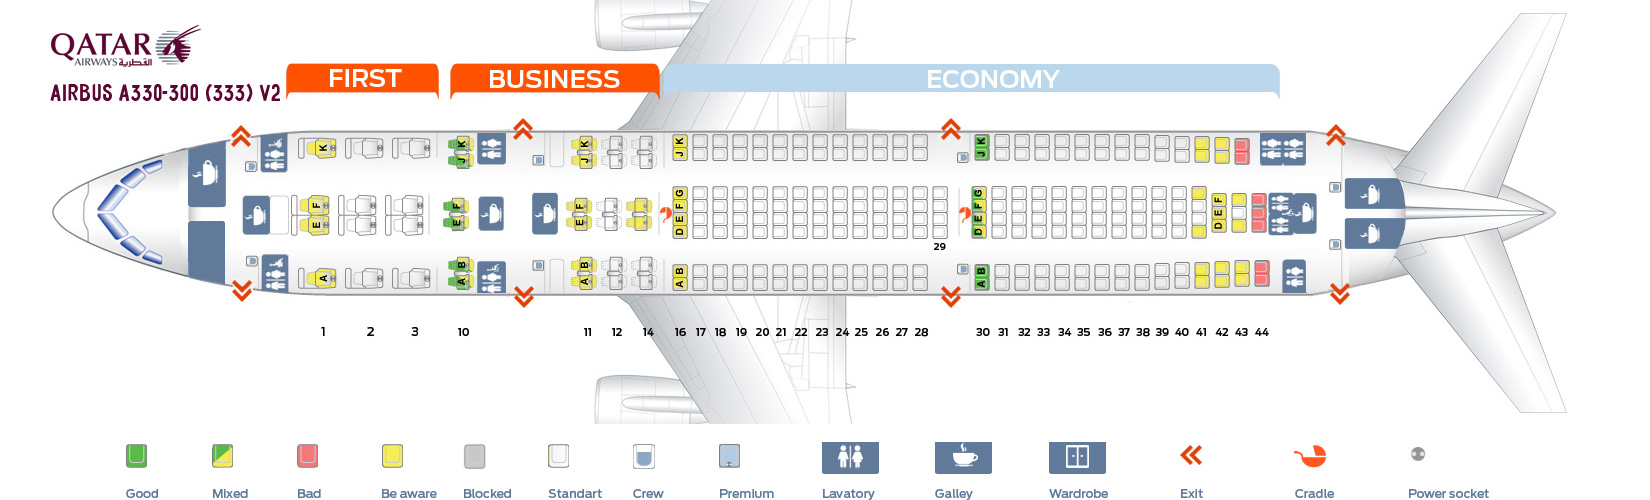 333 Plane Seating Chart